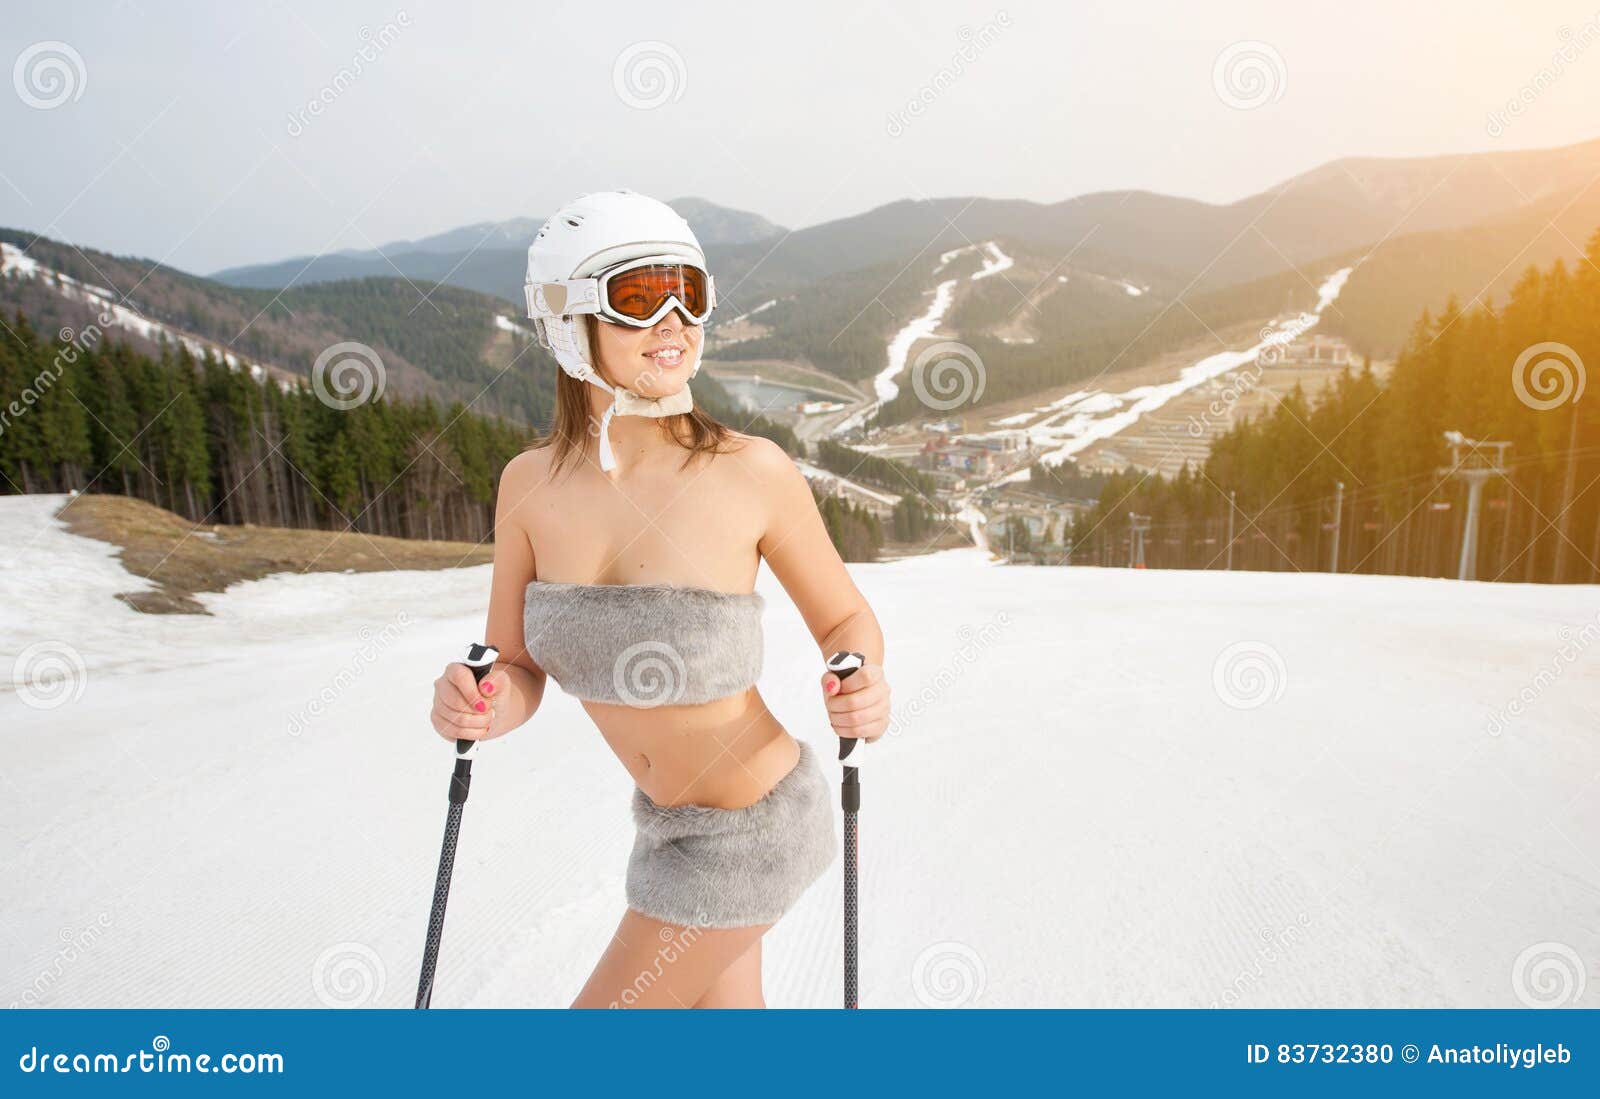 Naked girl skiing